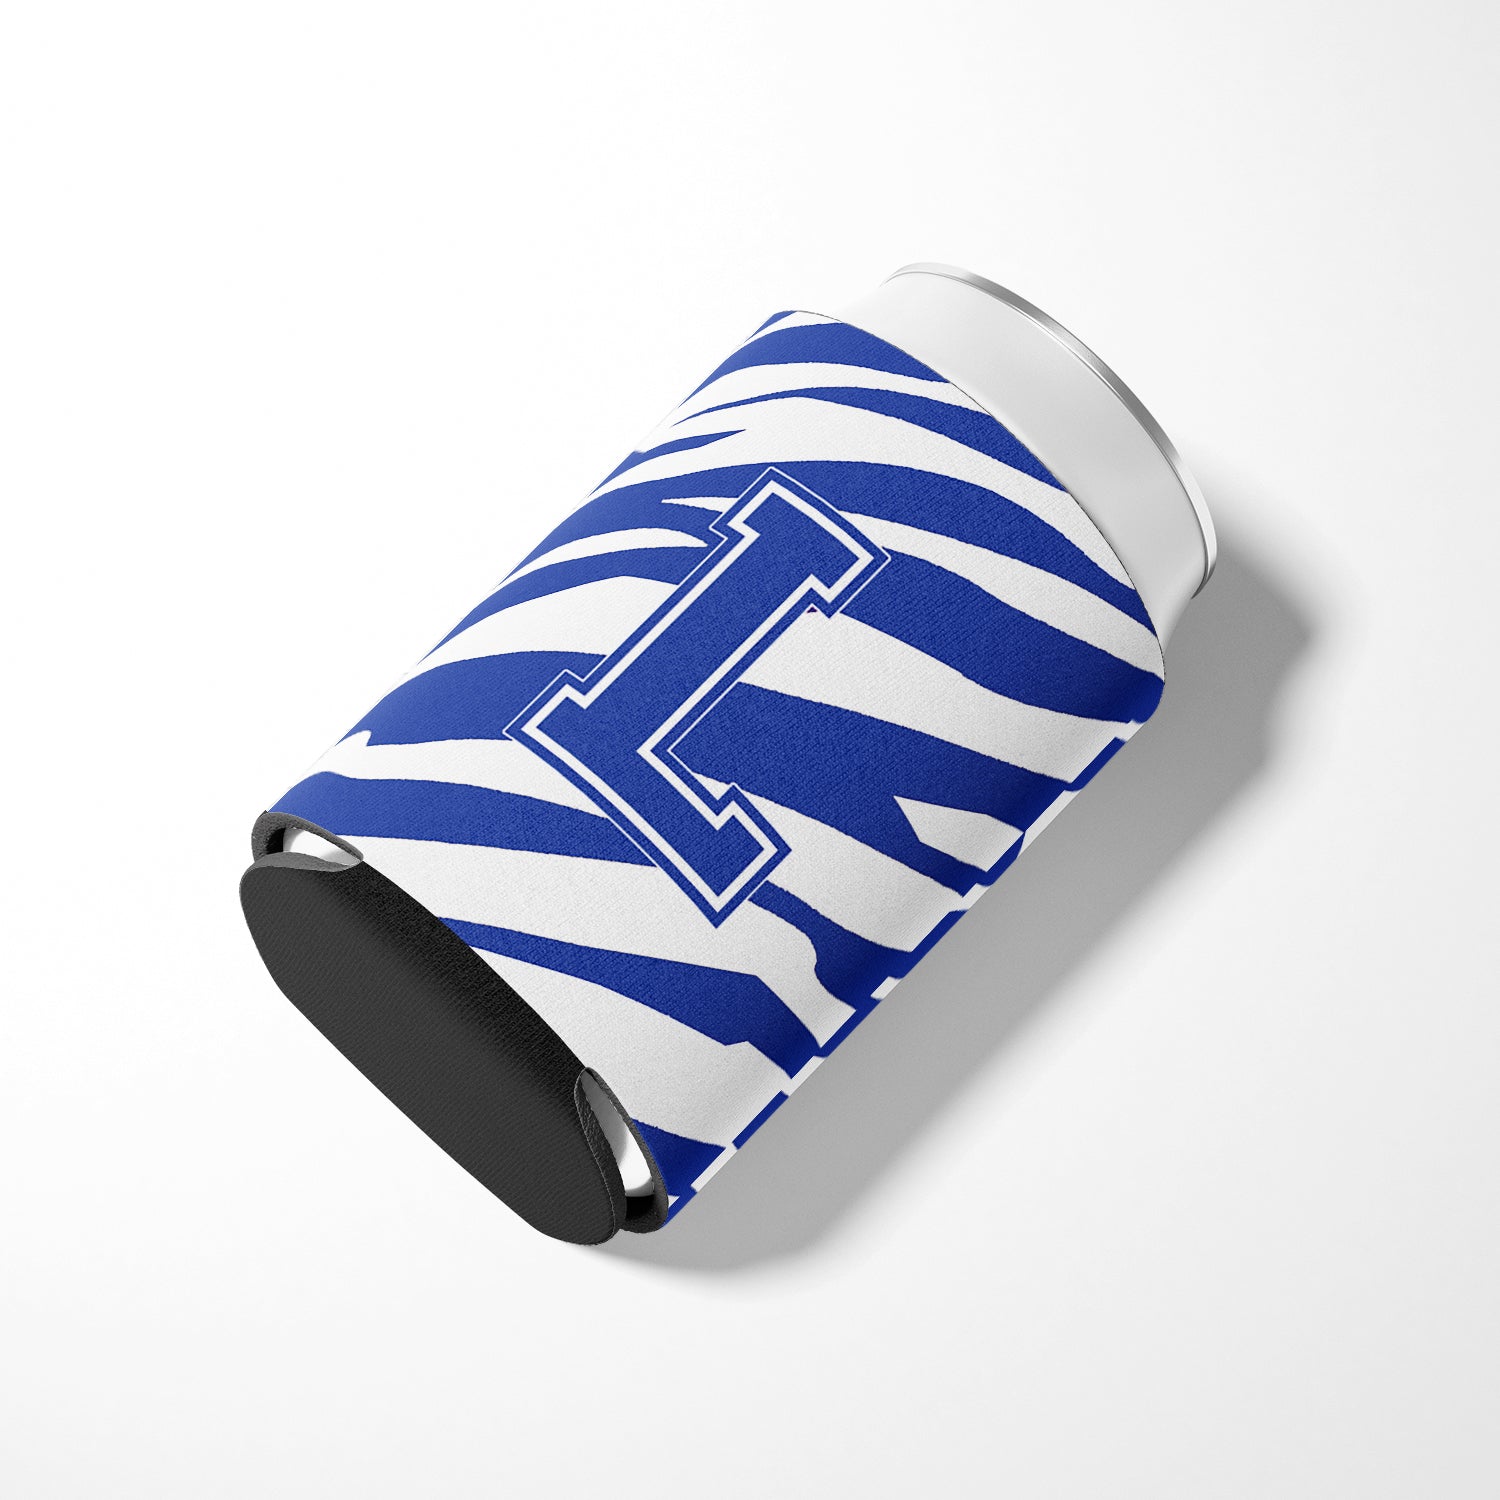 Letter L Initial Monogram - Tiger Stripe Blue and White Can Beverage Insulator Hugger